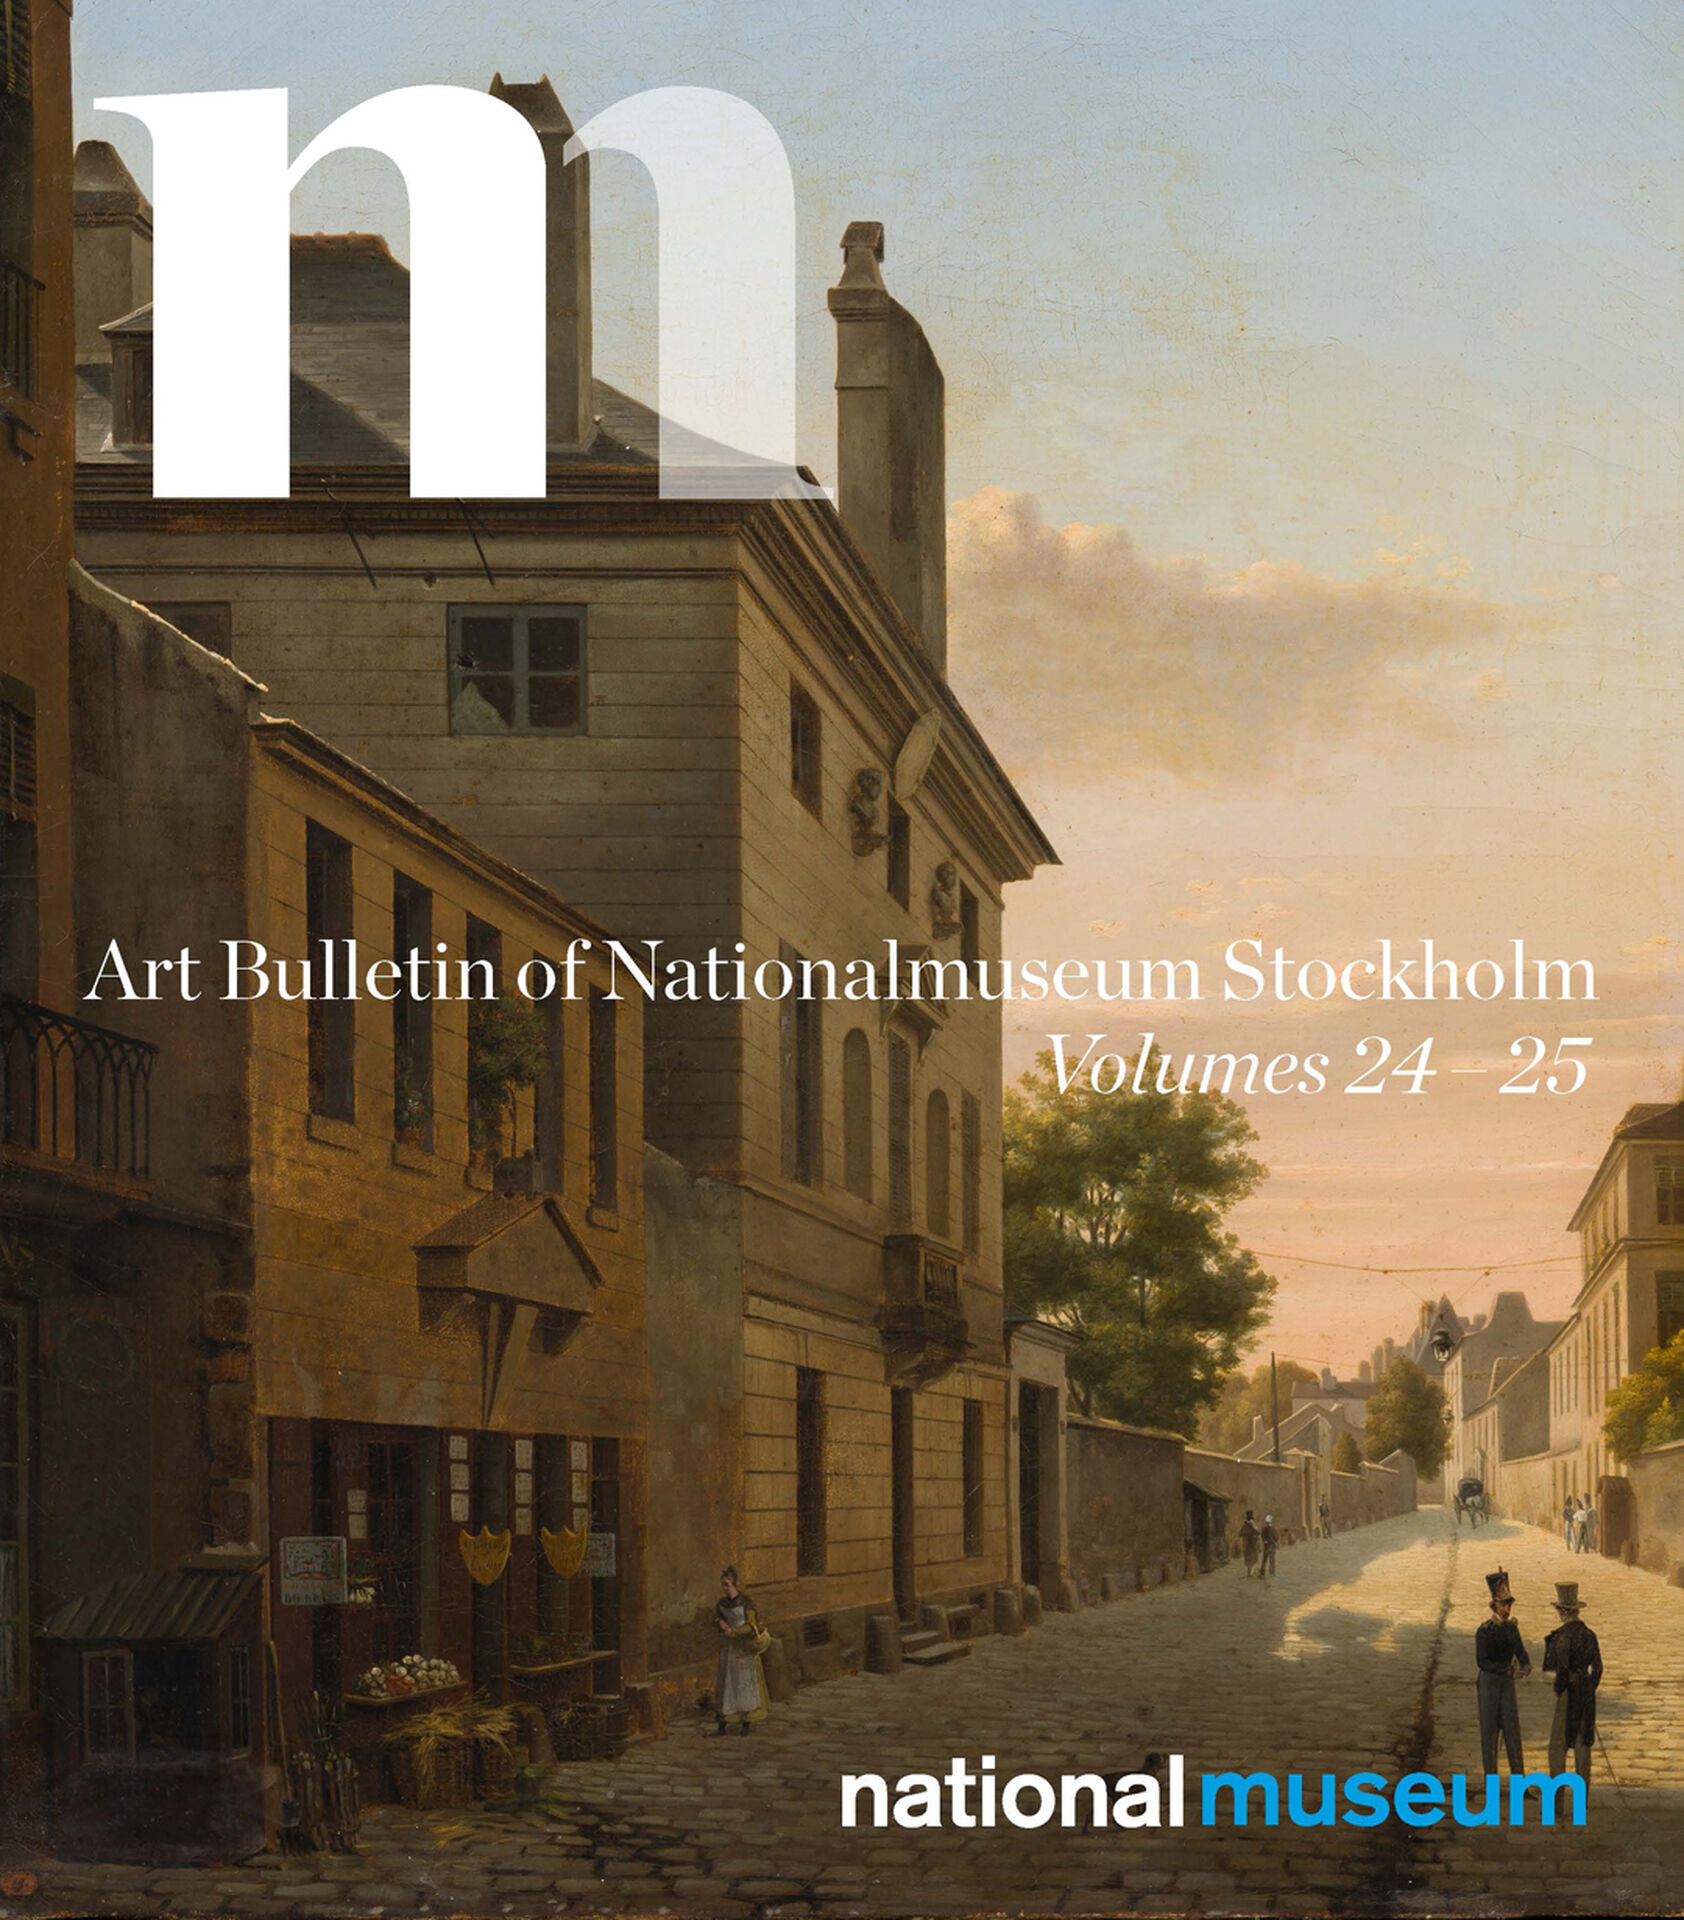 Art Bulletin of Nationalmuseum, volumes 24-25